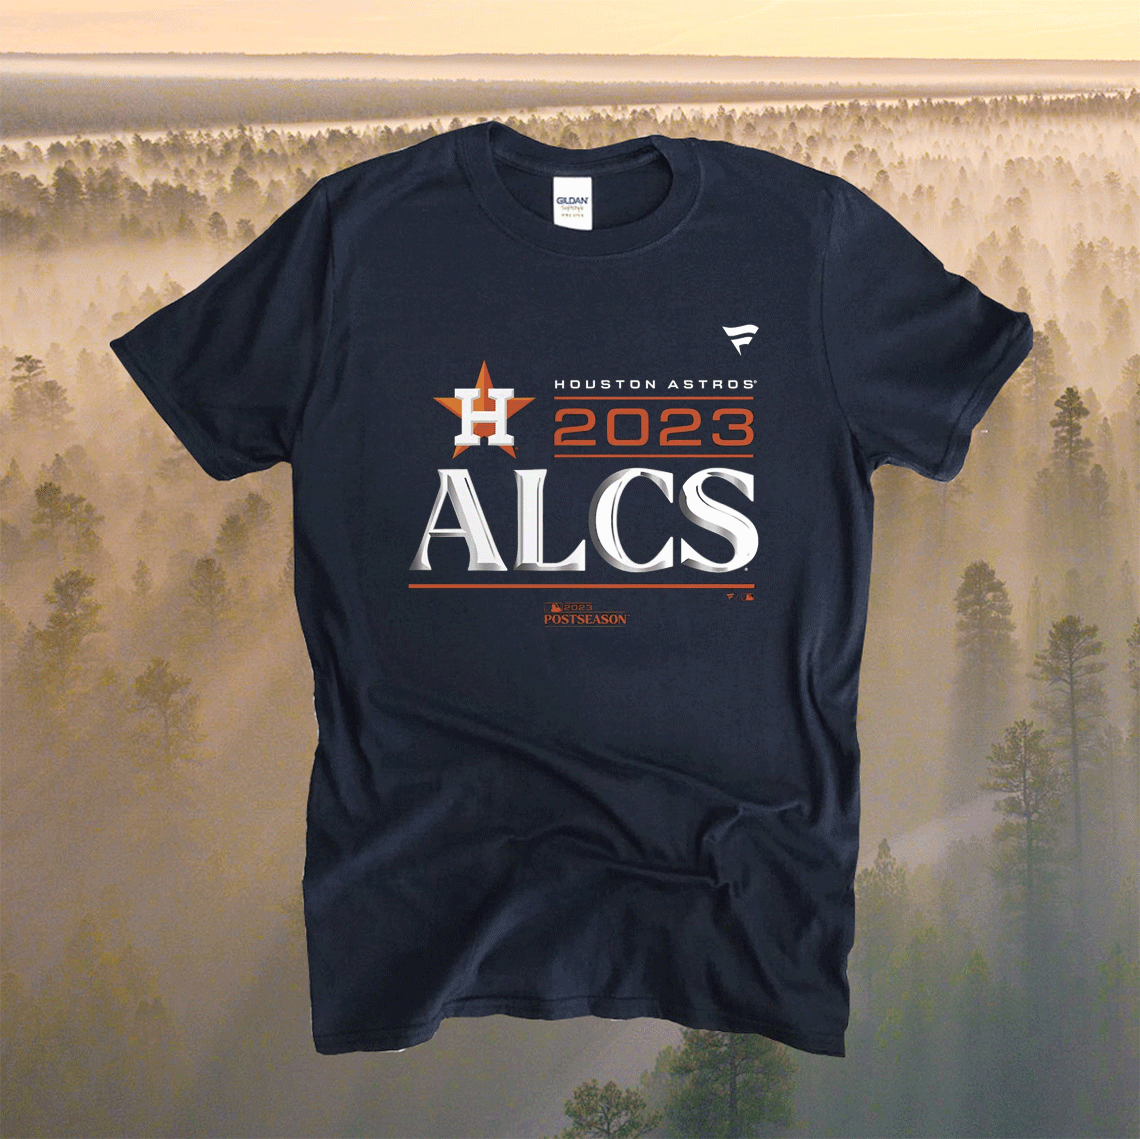 Houston Astros Alcs 2023 T-Shirt - Teeducks